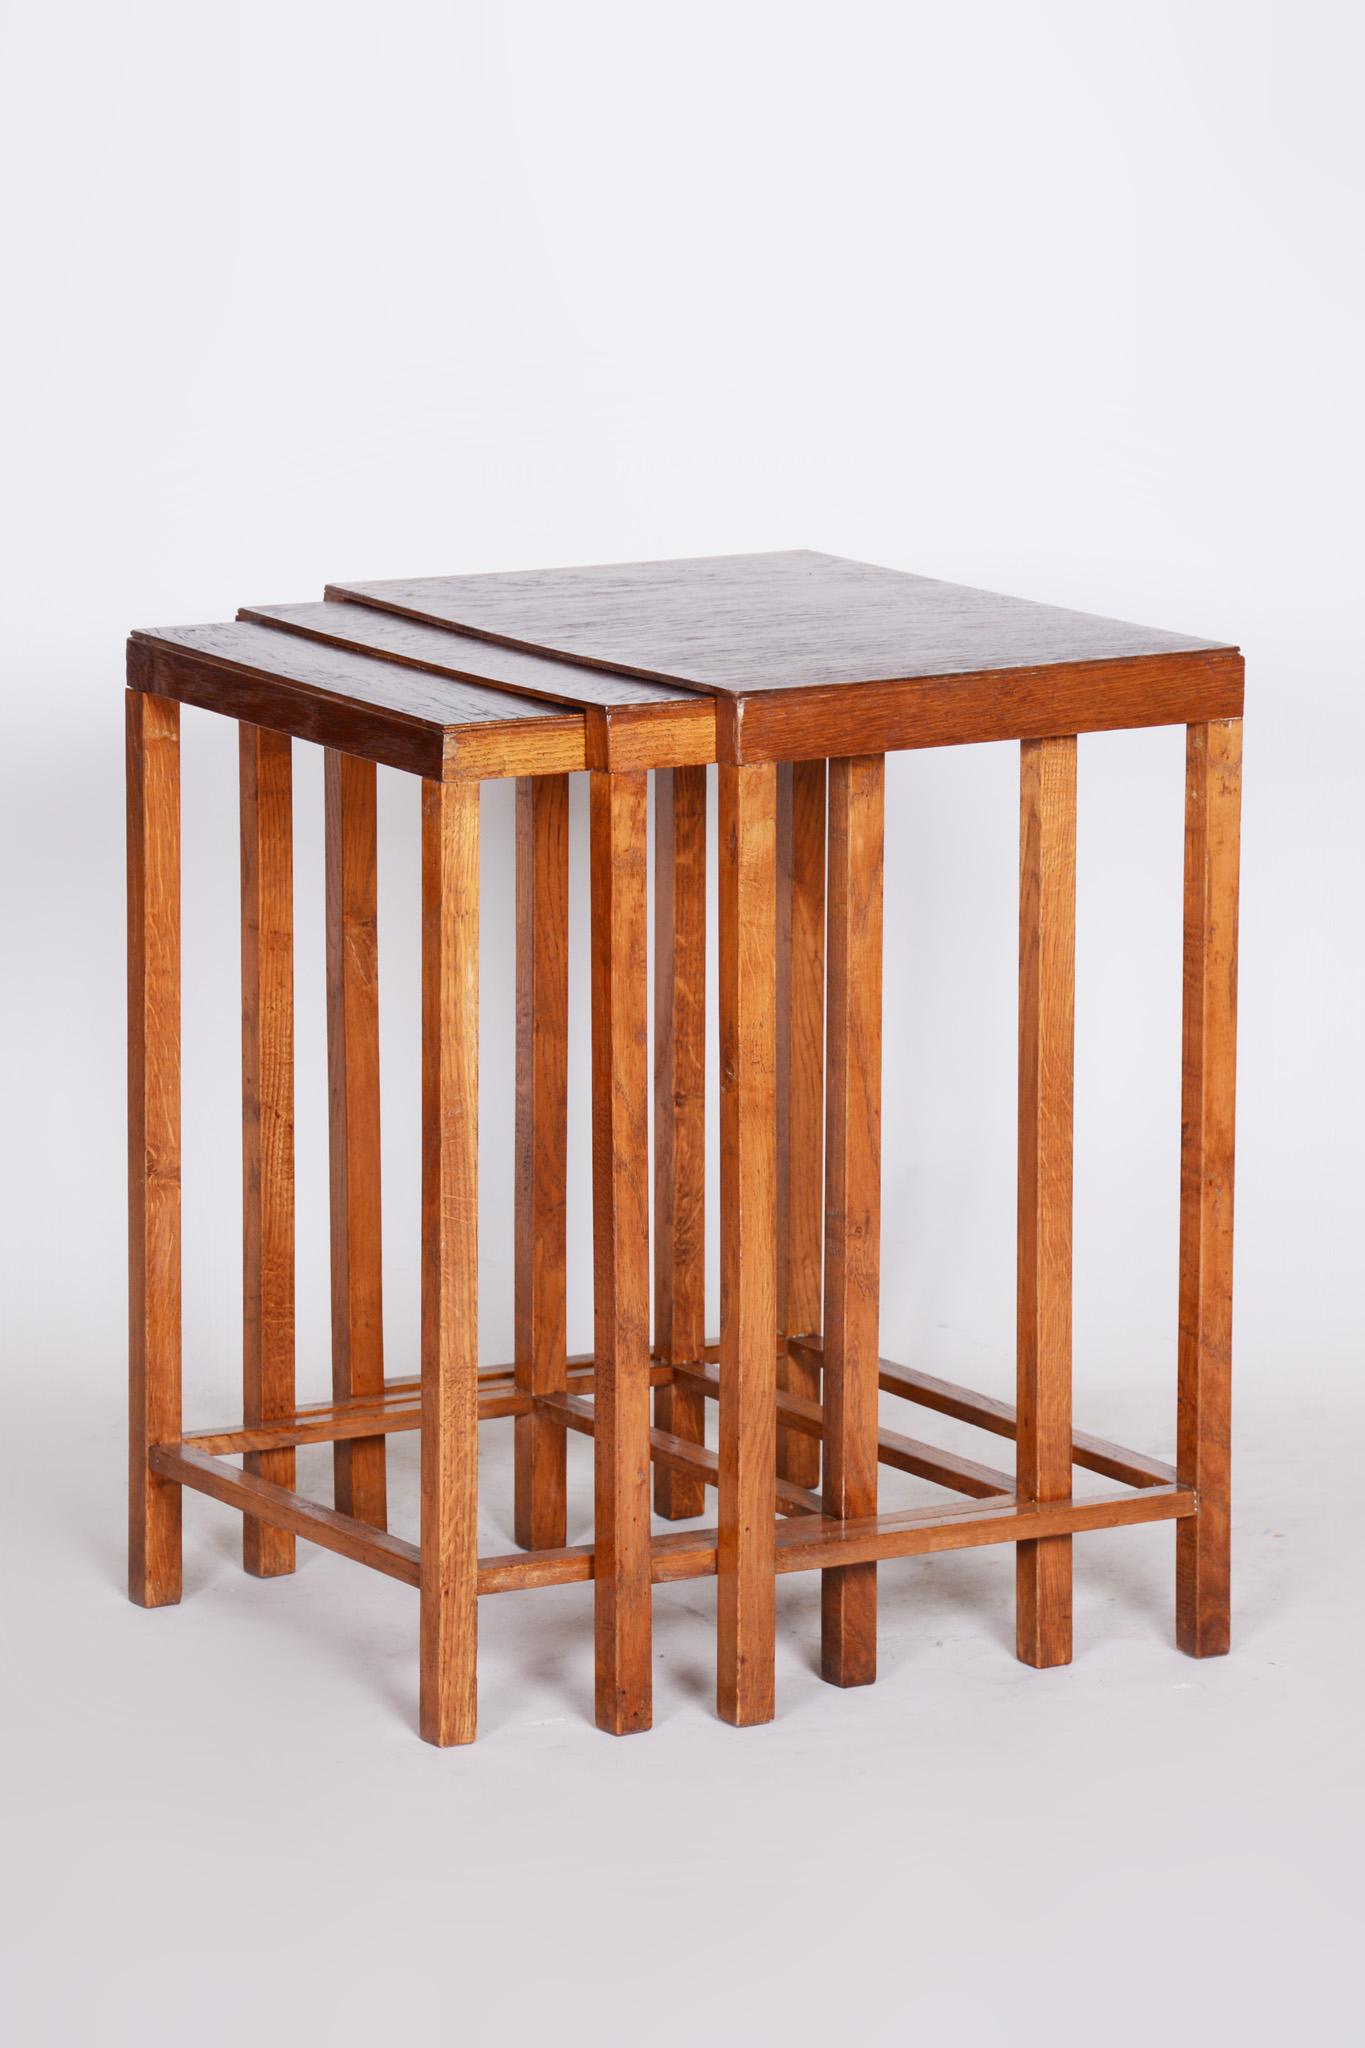 Brown Jan Vanek Nest Tables Made in 1930s Czechia, Art Deco  For Sale 1